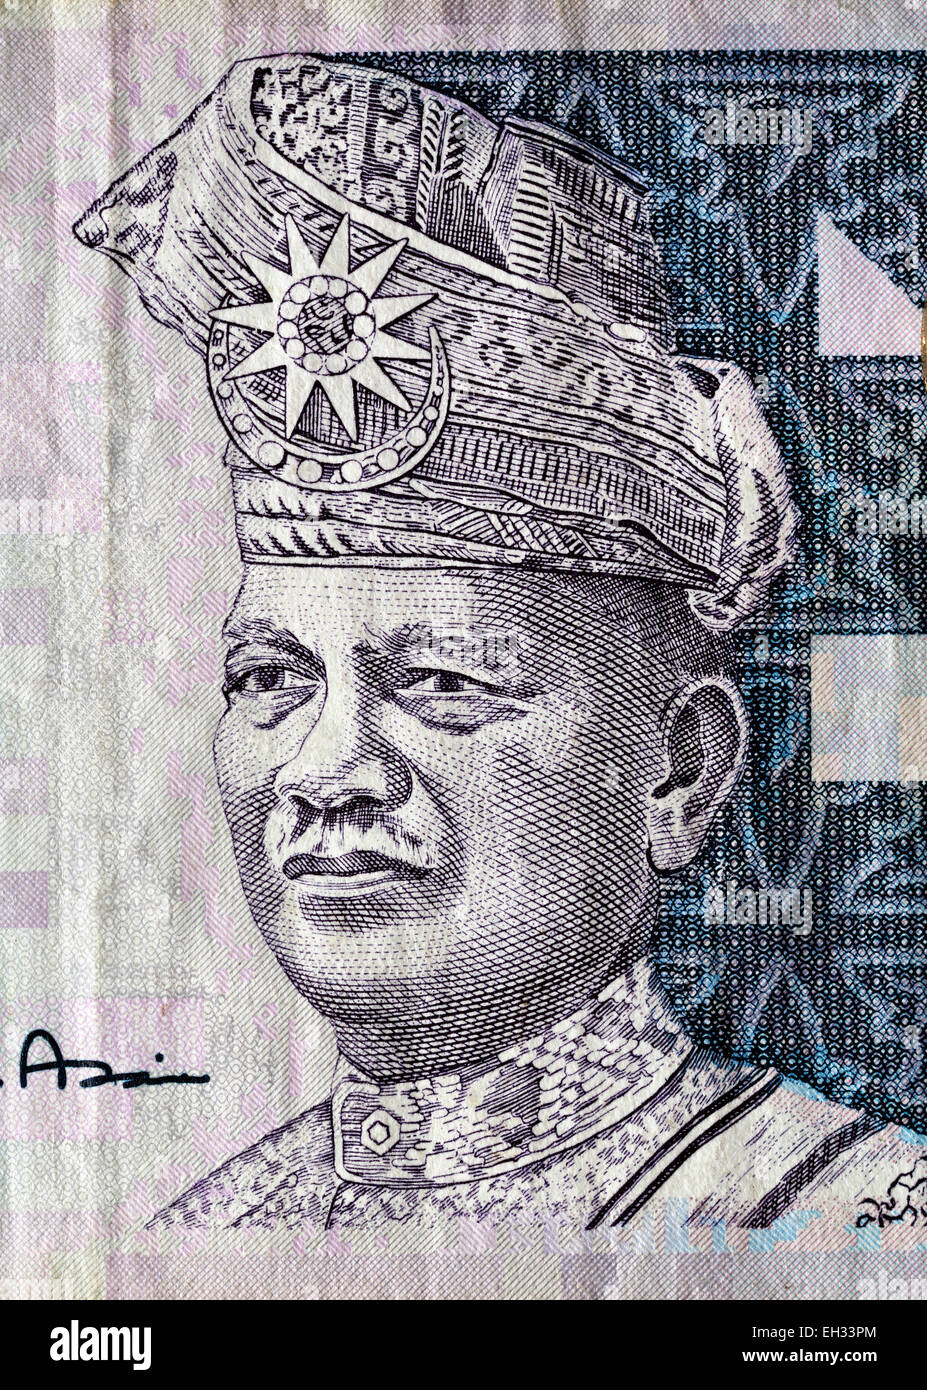 Abdul Rahman of Negeri Sembilan from 1 ringgit banknote, Malaysia, 2000 Stock Photo